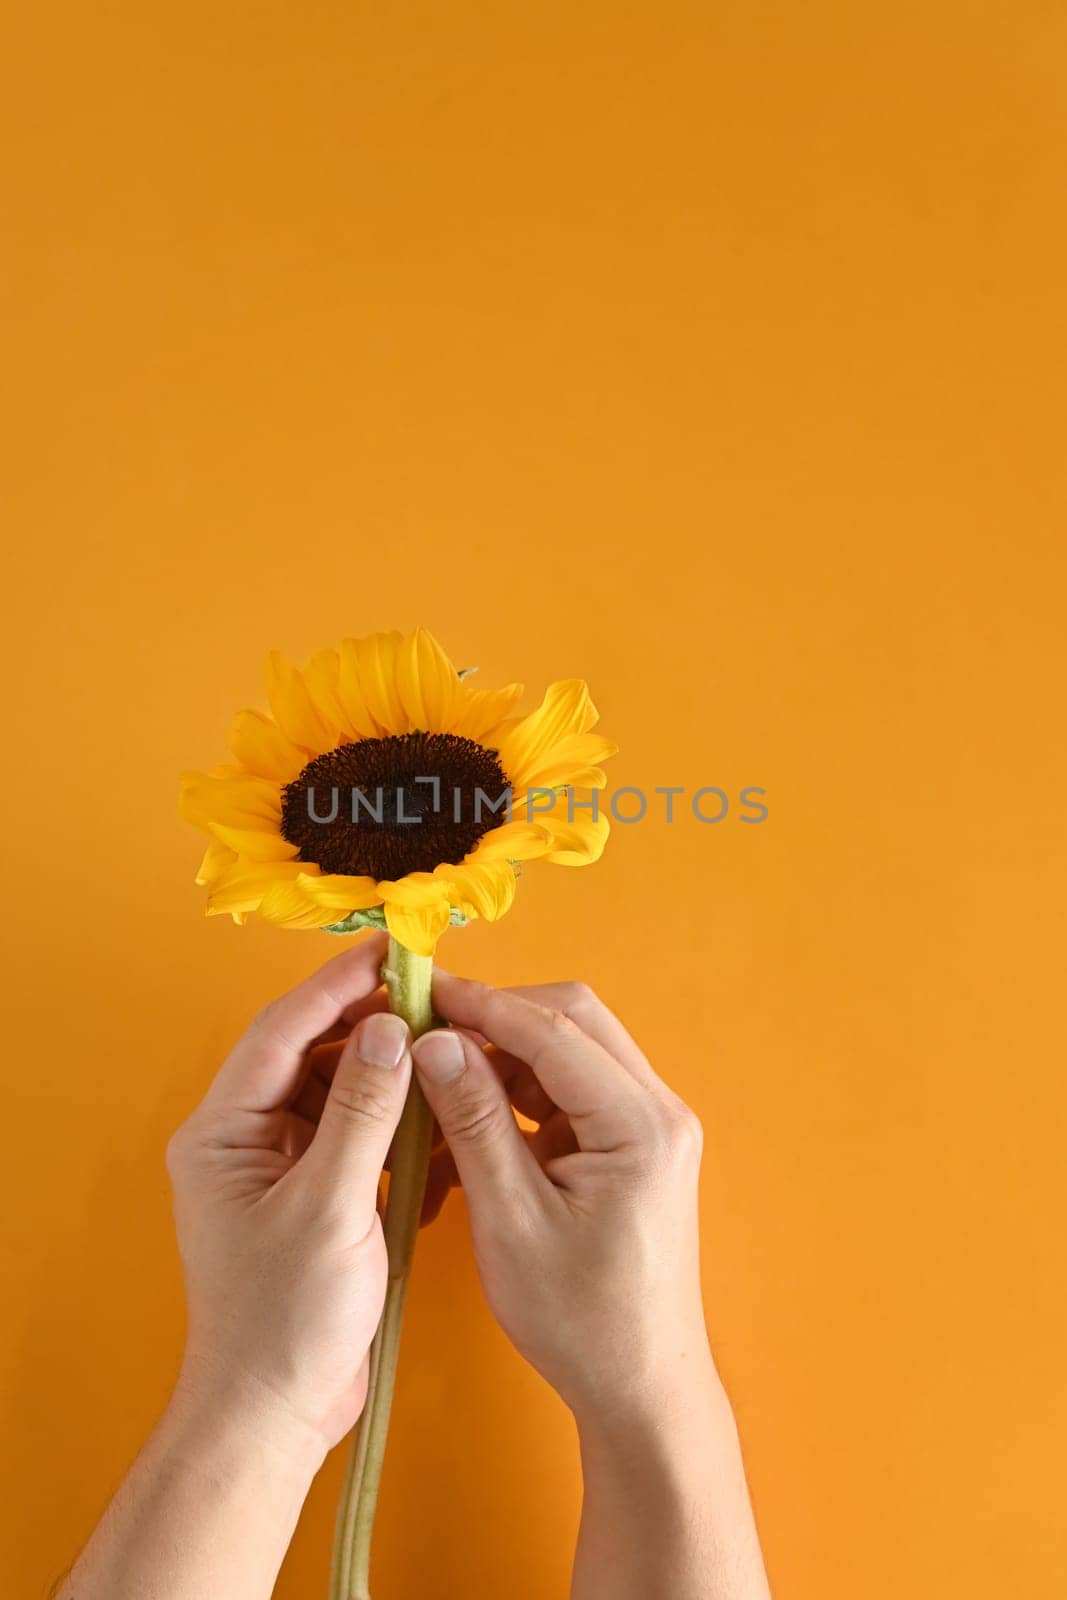 Unrecognizable hands holding sunflower over light yellow background by prathanchorruangsak